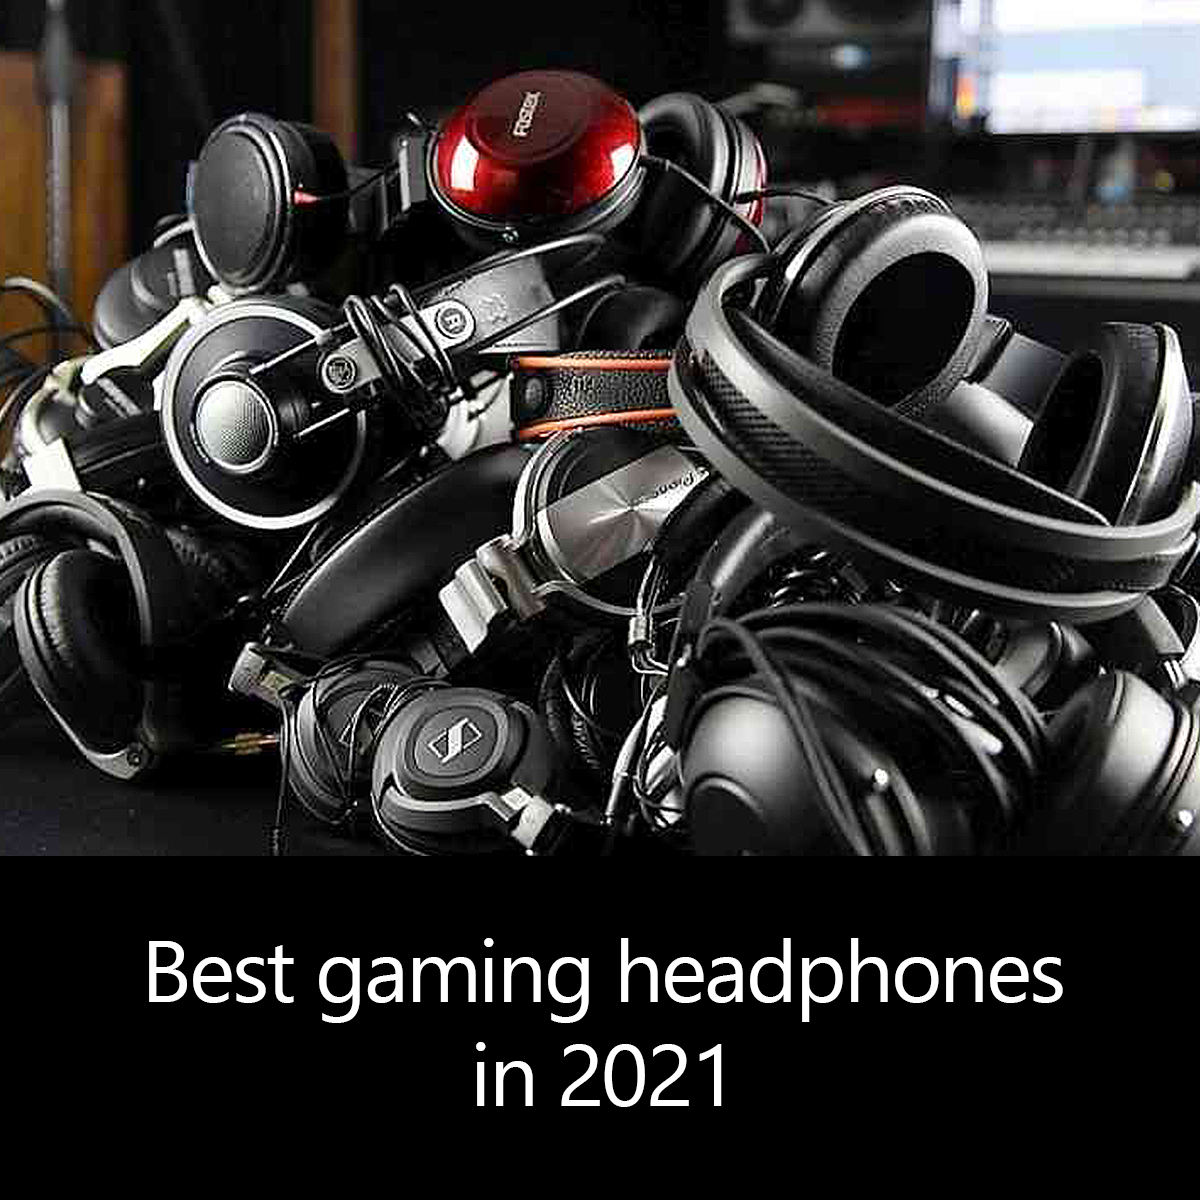 Best gaming headphones in 2021